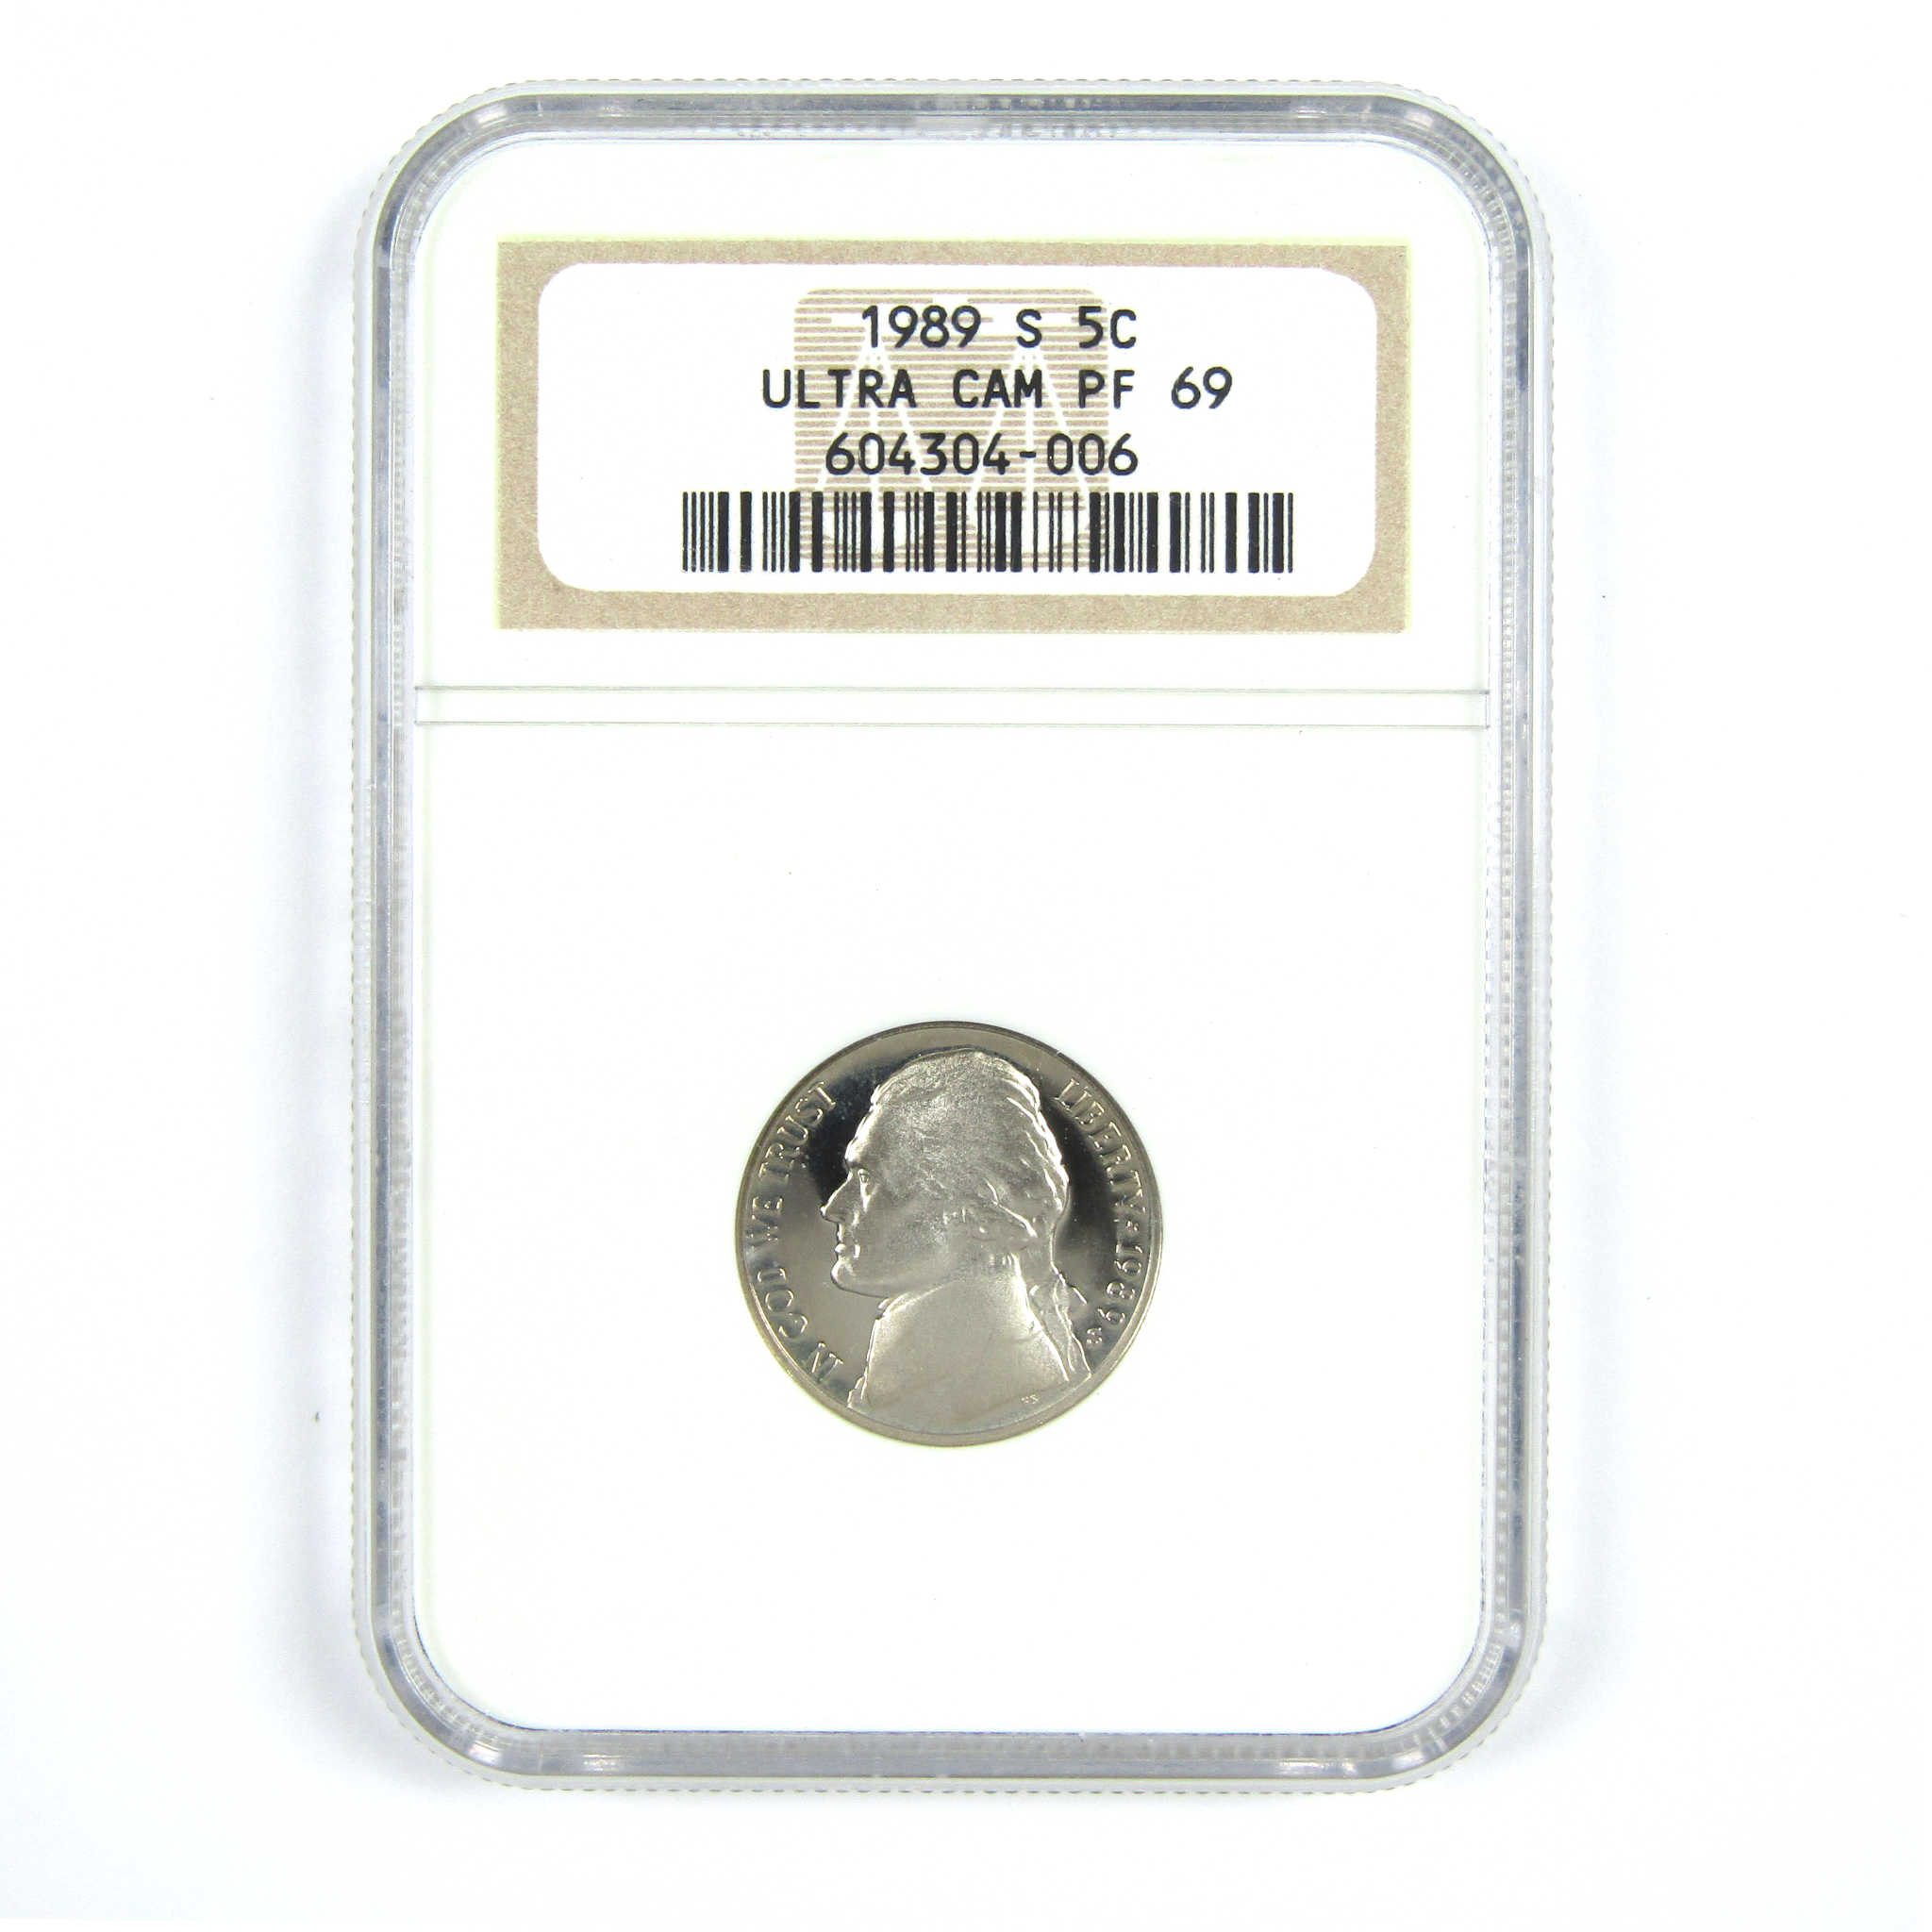 1989 S Jefferson Nickel PF 69 UCAM NGC 5c Proof Coin SKU:CPC7368